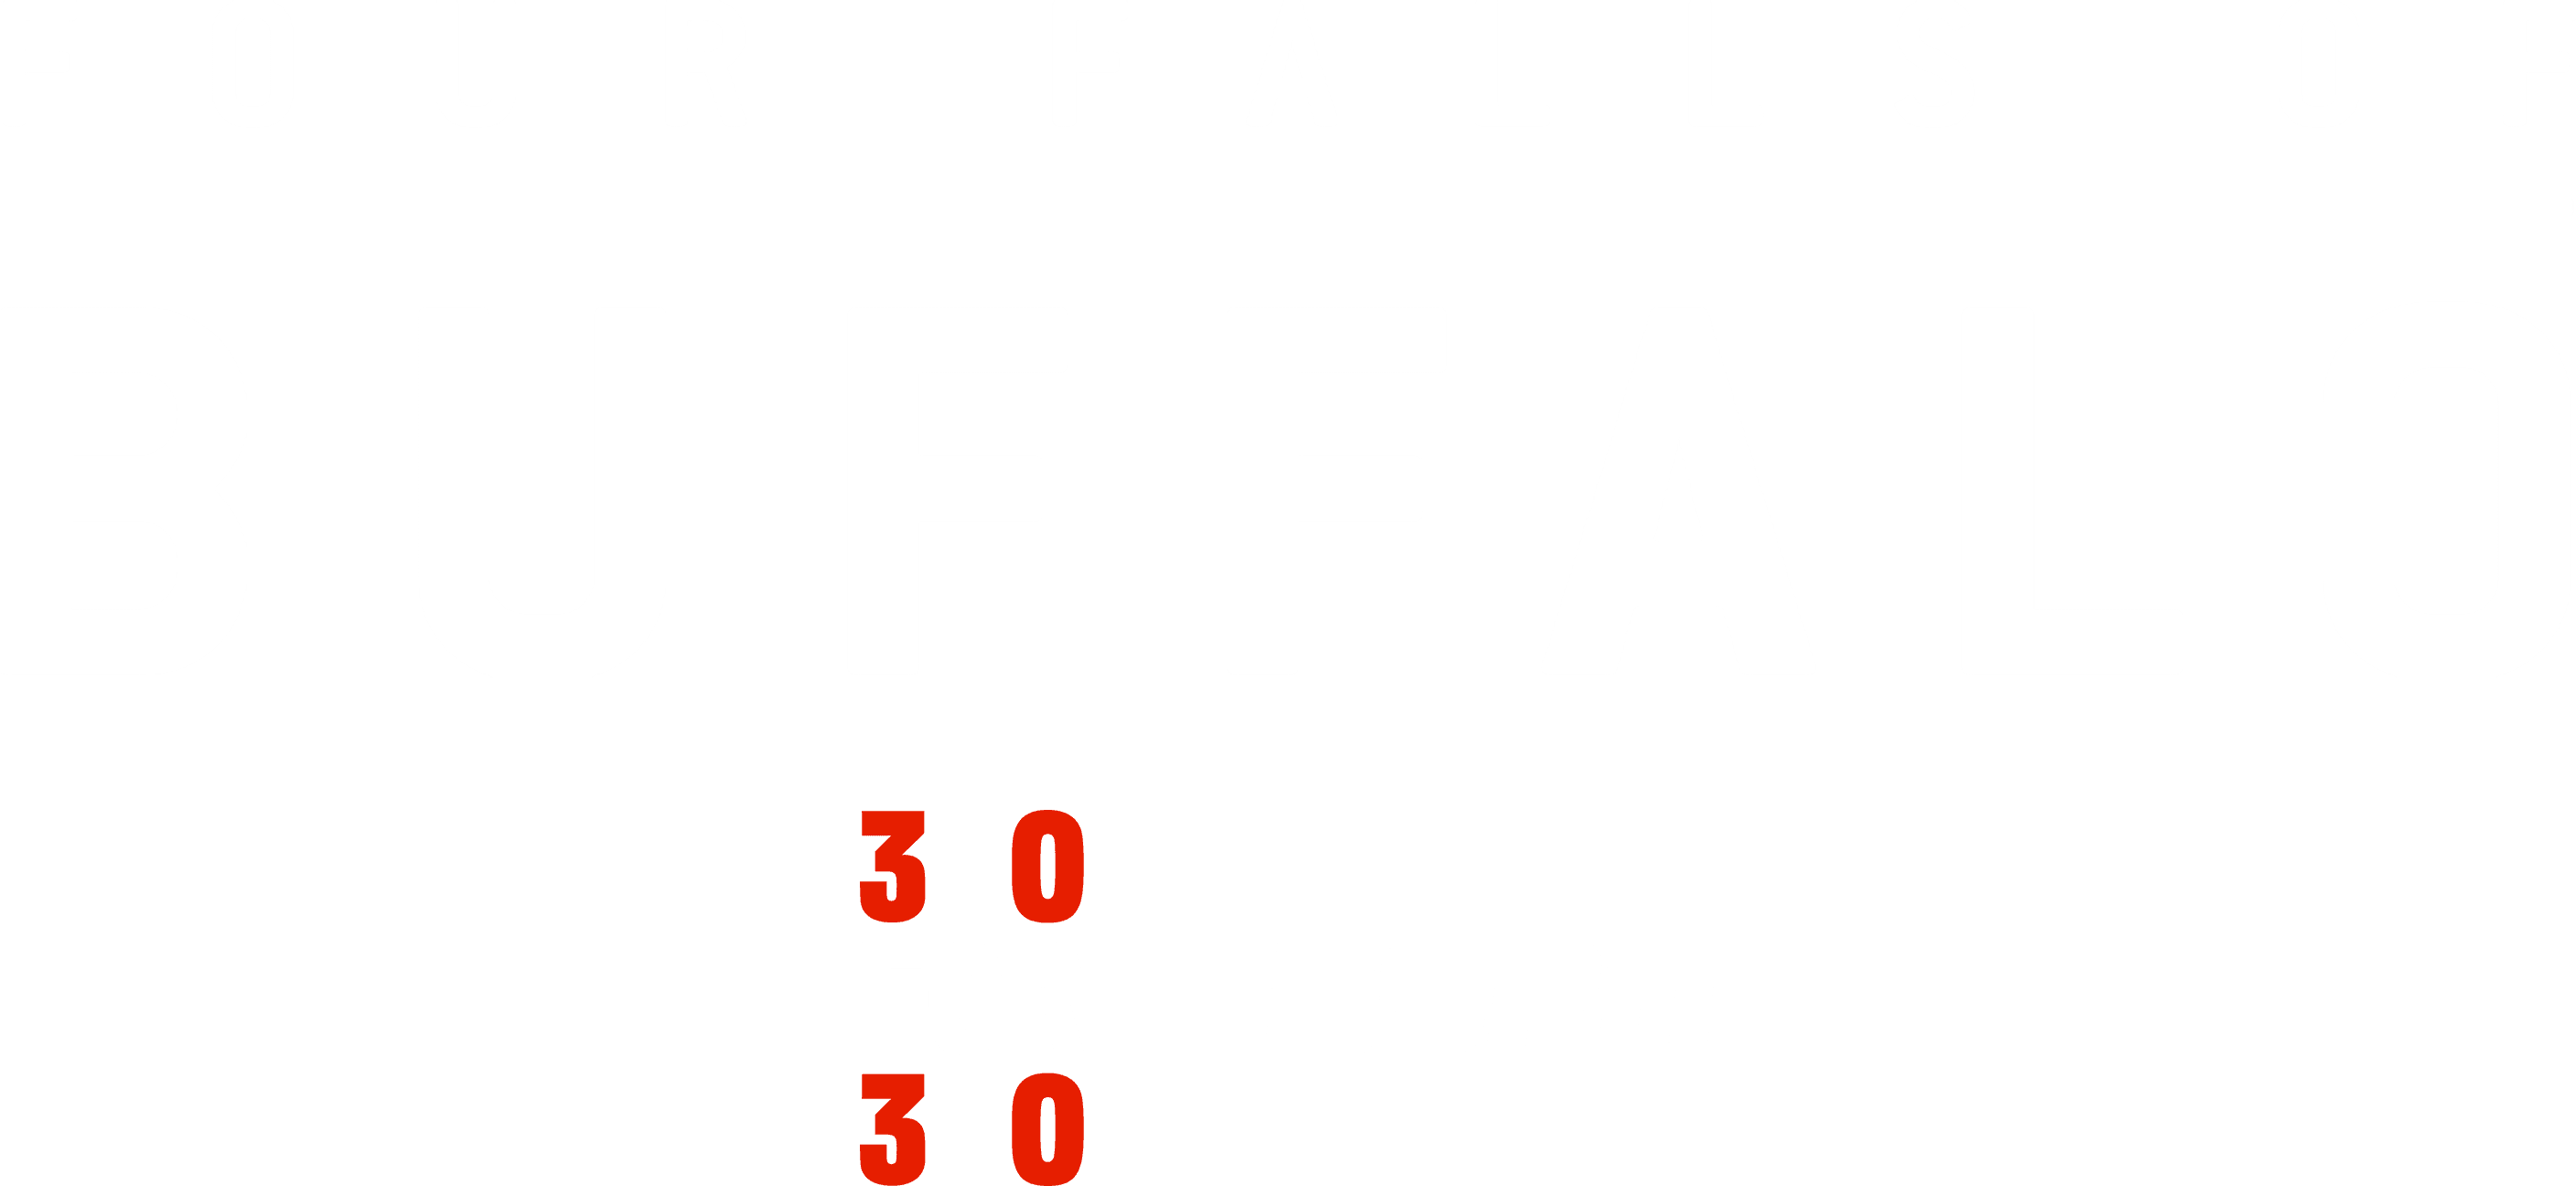 Four Falls of Buffalo logo